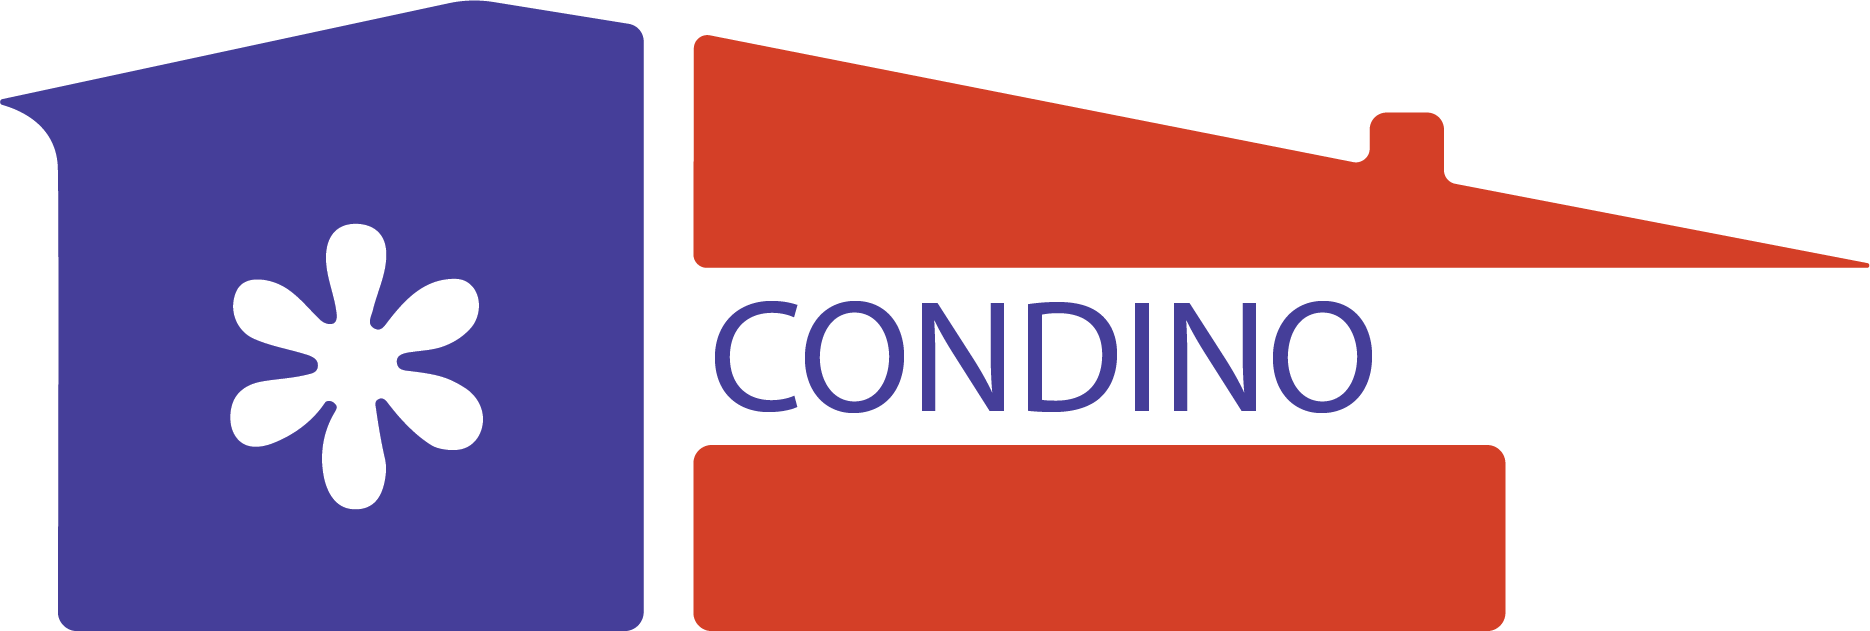 Condino Heating & Air Conditioning logo